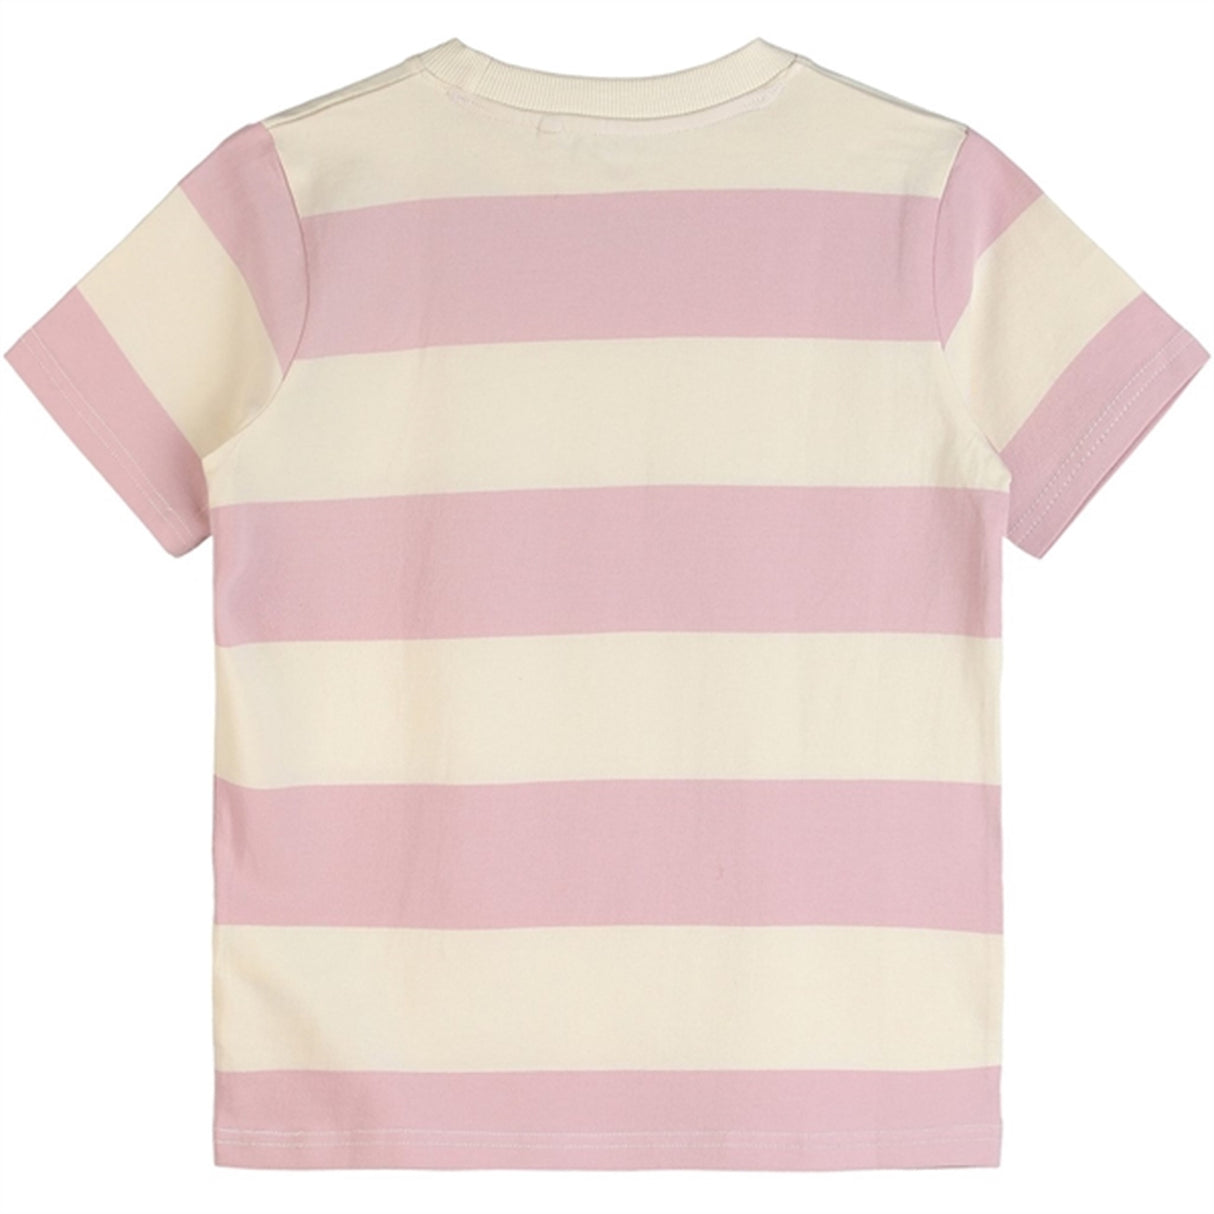 The New Pink Nectar Jae T-shirt 5